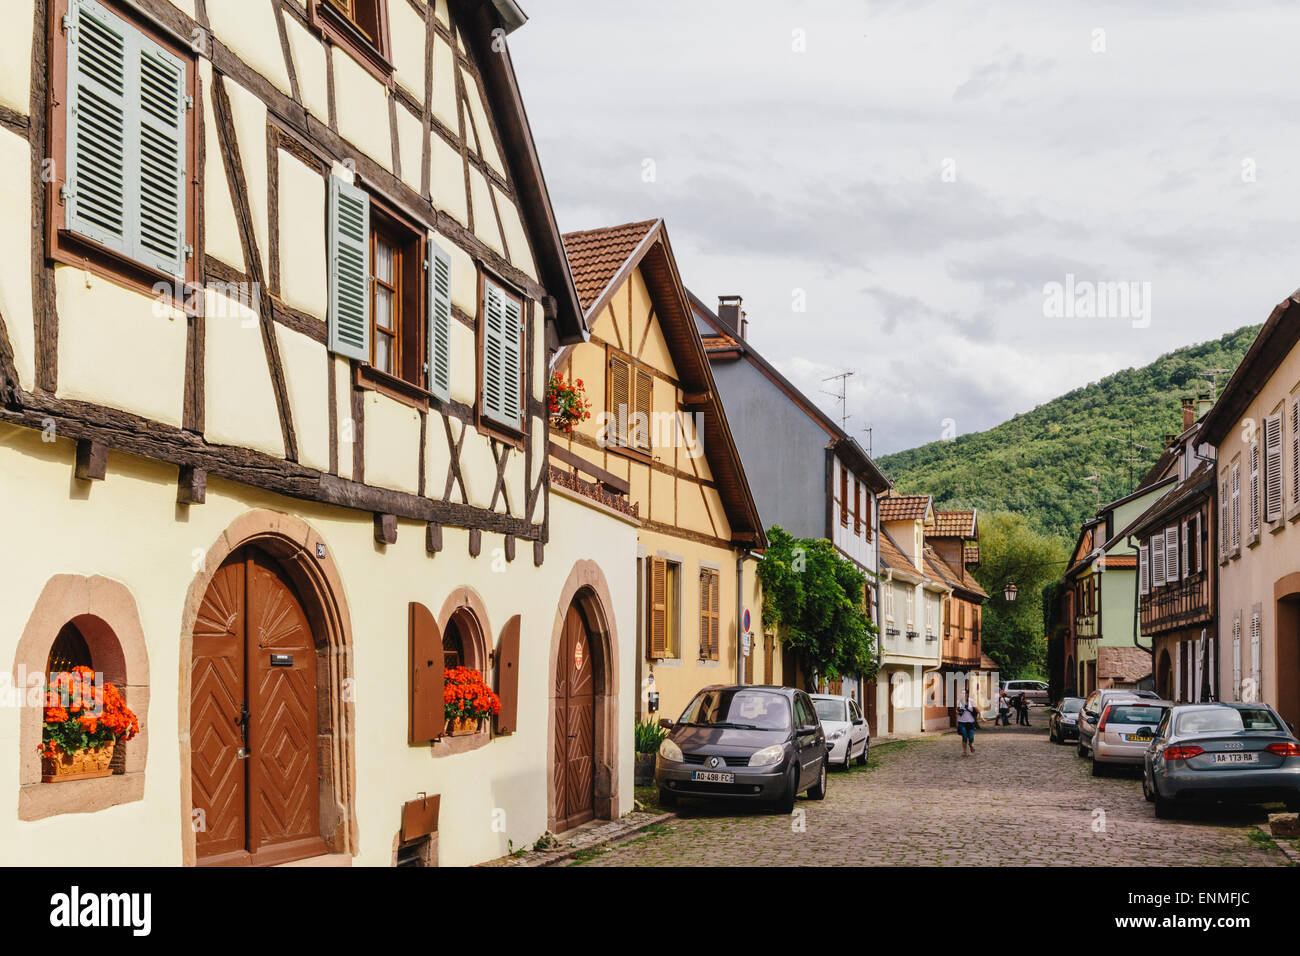 Street scene, Kaysersberg, Alsace, France Stock Photo